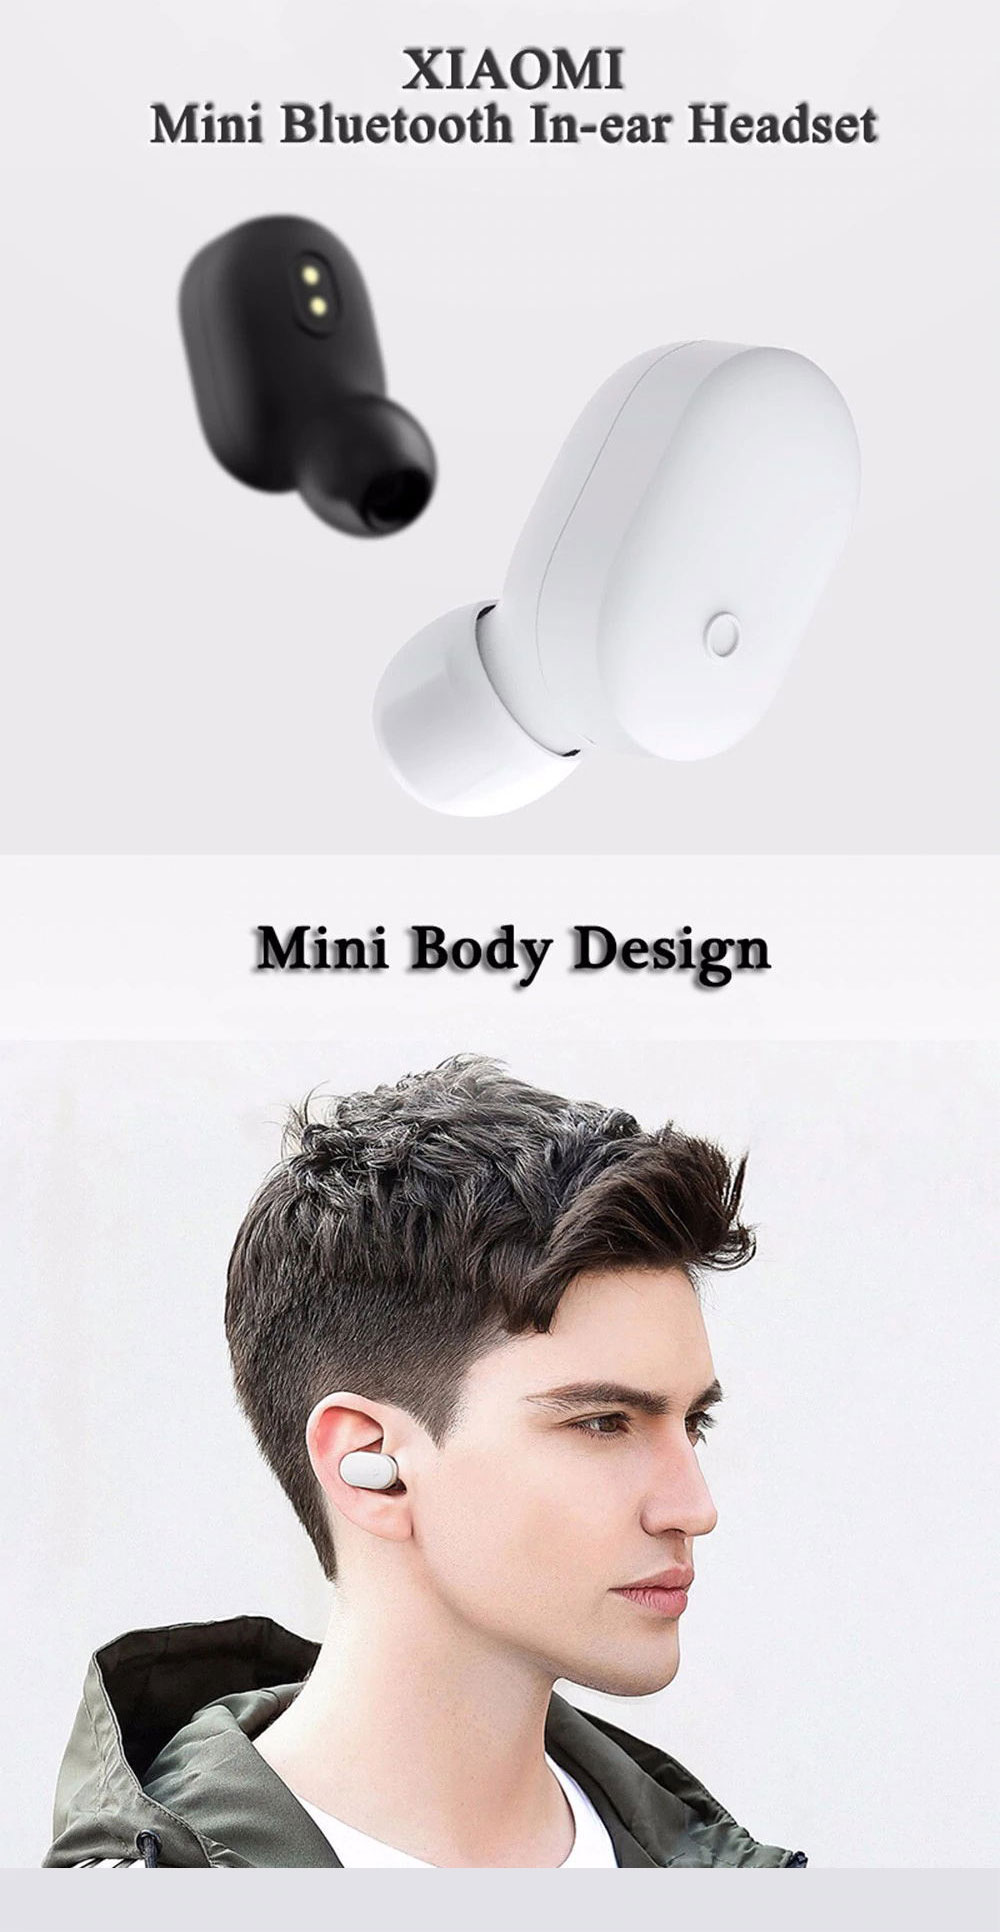 xiaomi lyej05lm mini in-ear bluetooth earphone